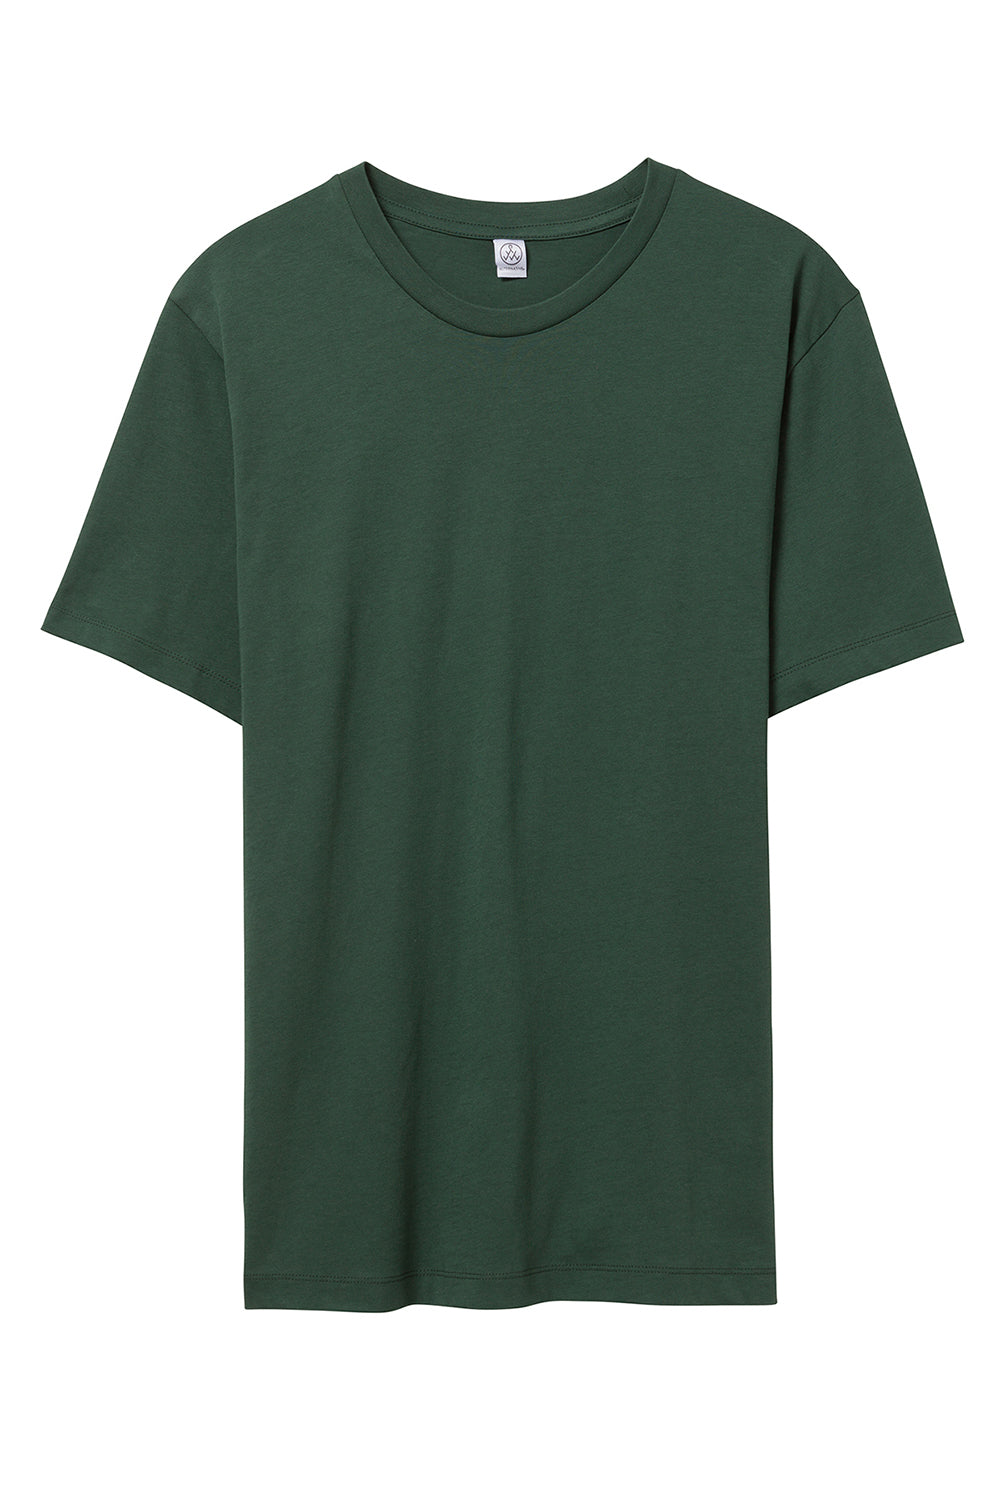 Alternative AA1070/1070 Mens Go To Jersey Short Sleeve Crewneck T-Shirt Pine Green Flat Front